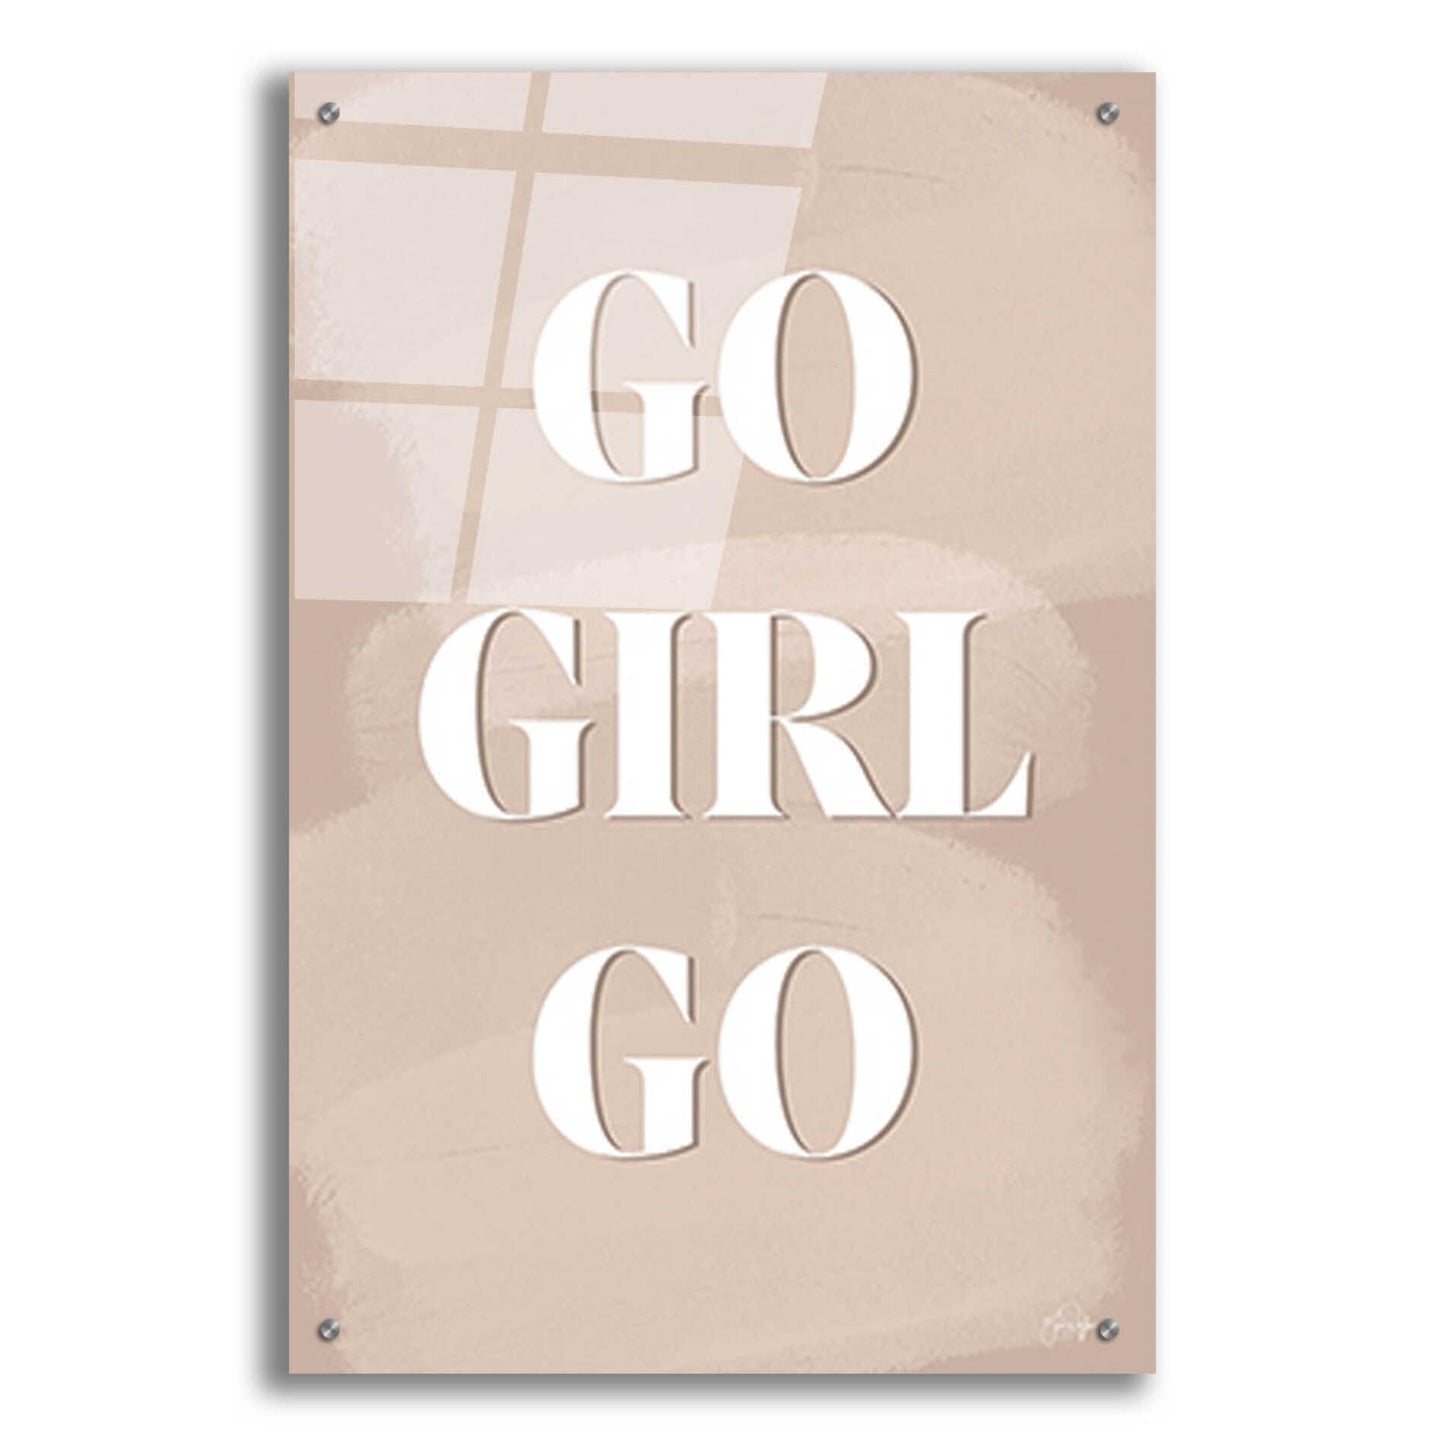 Epic Art 'Go Girl Go' by Yass Naffas Designs, Acrylic Glass Wall Art,24x36